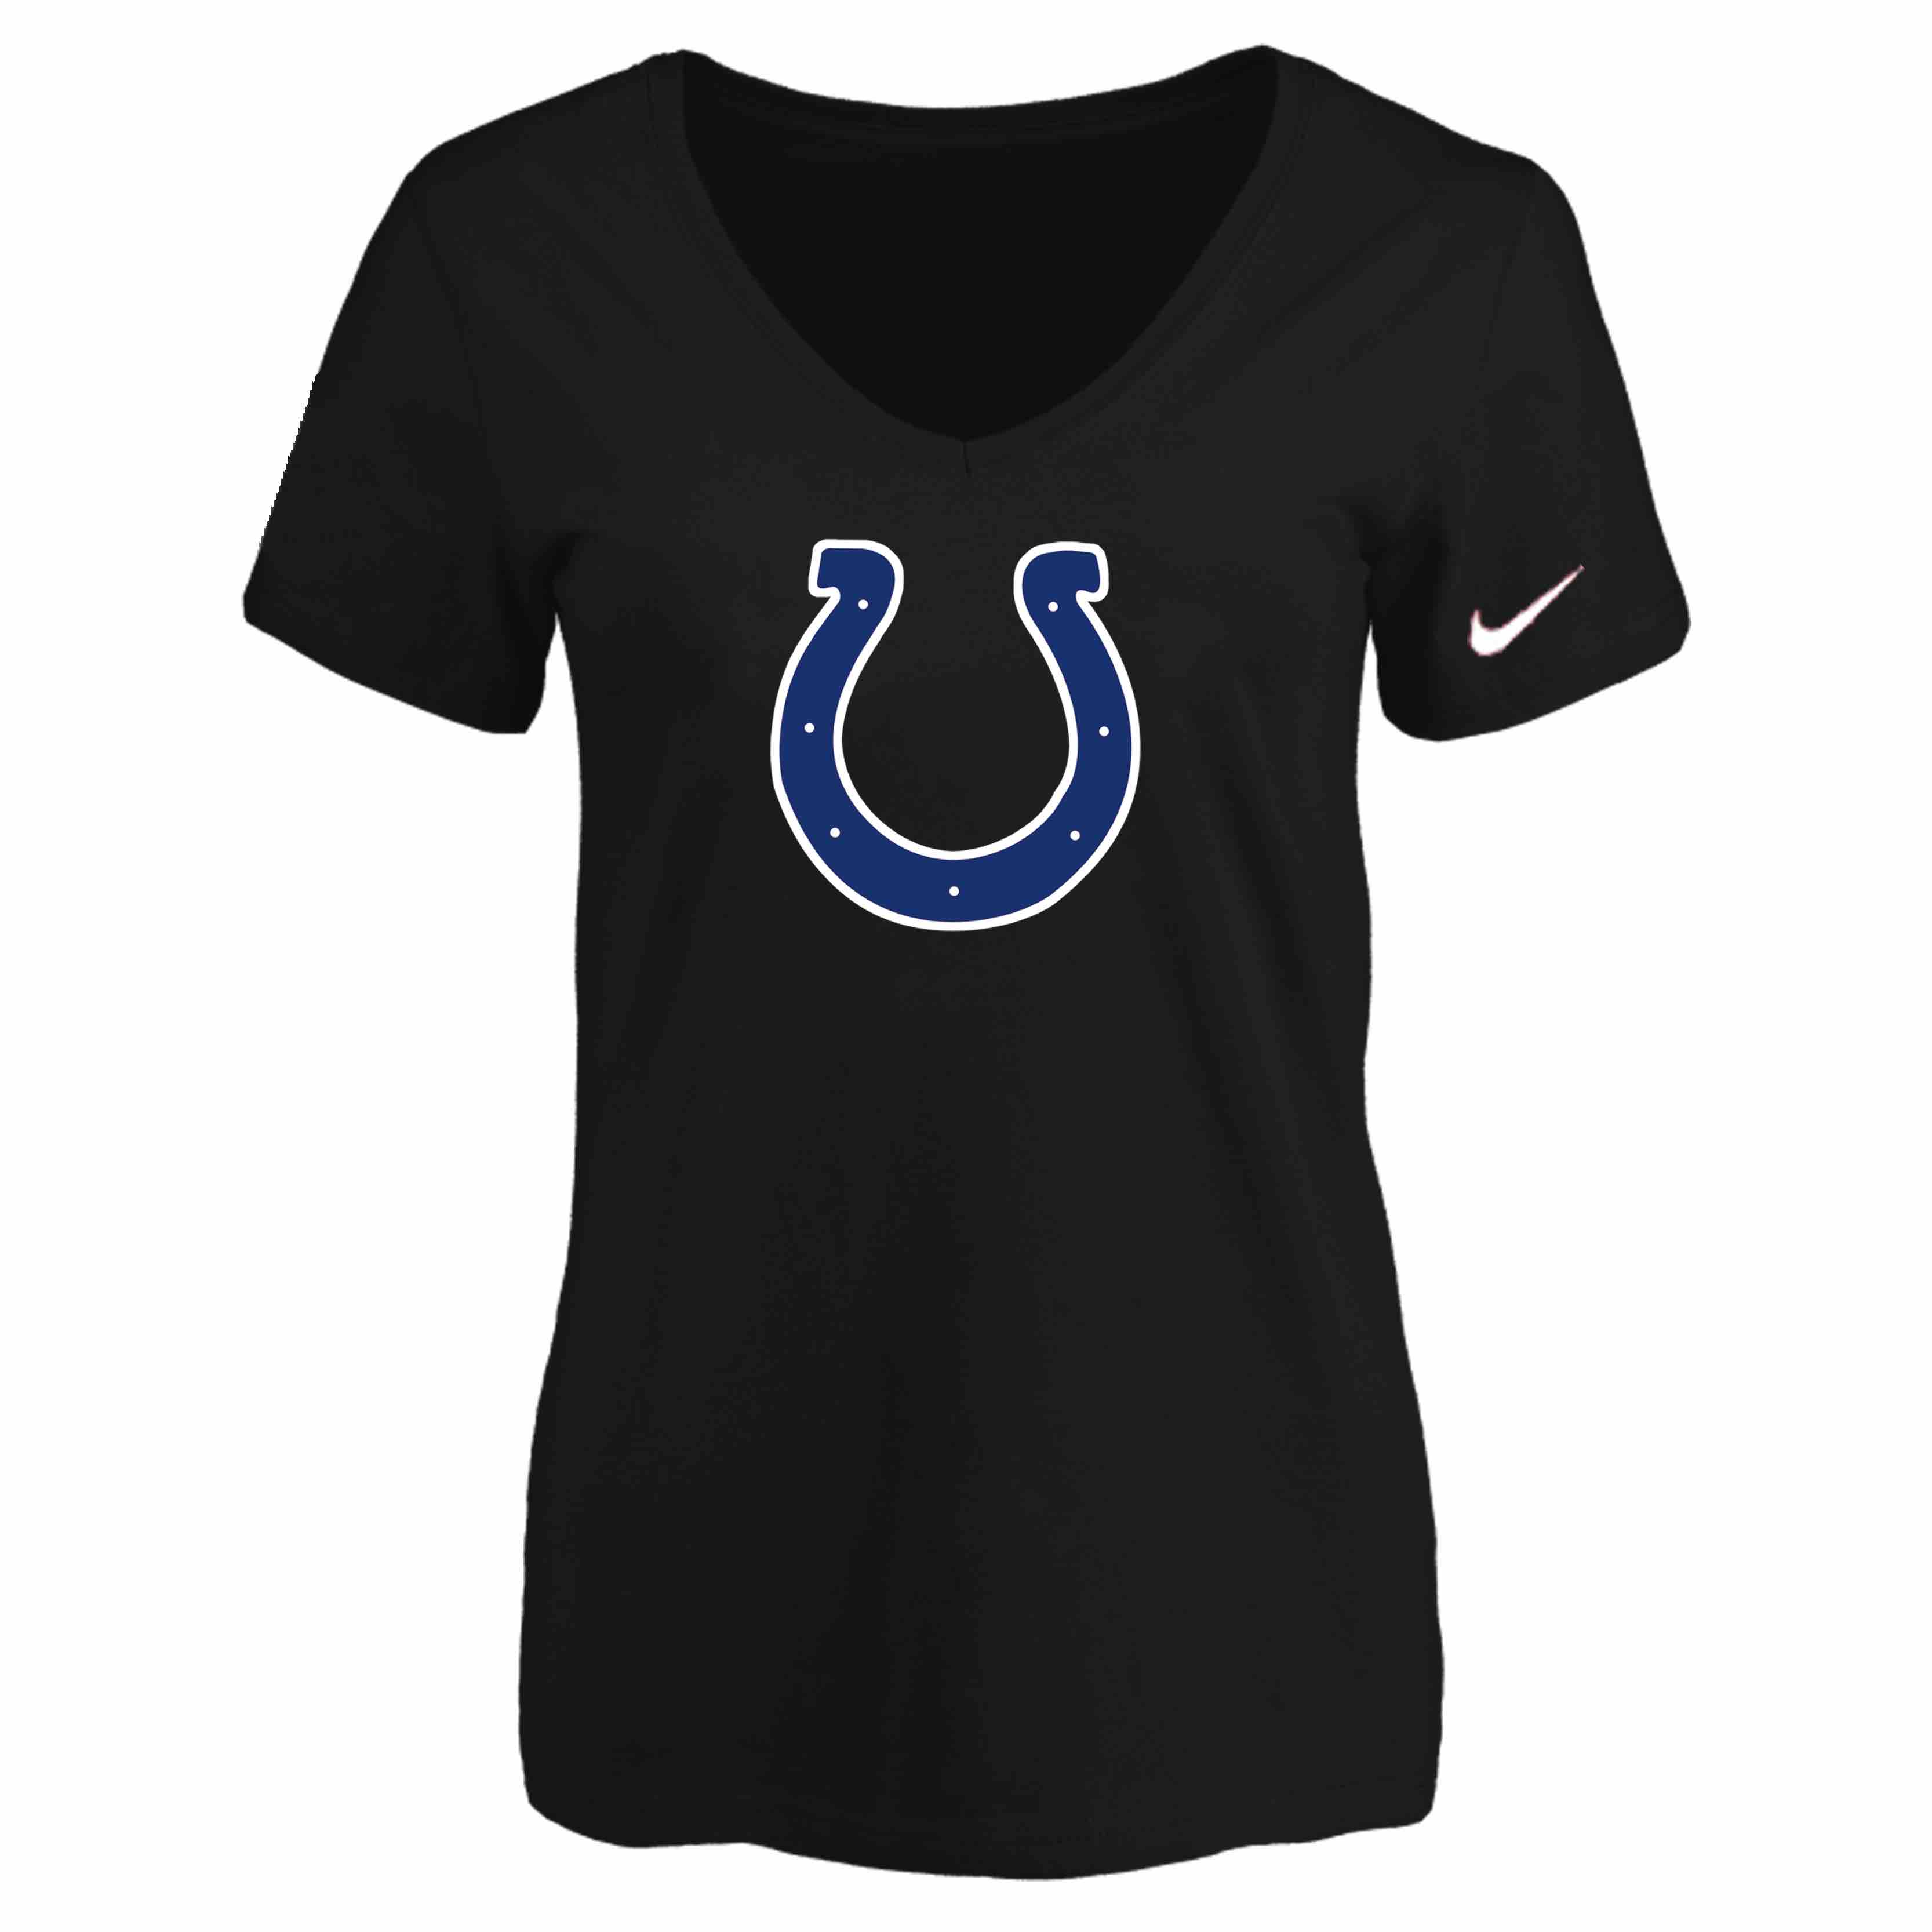 Indiannapolis Colts Black Womens Logo V-neck T-Shirt